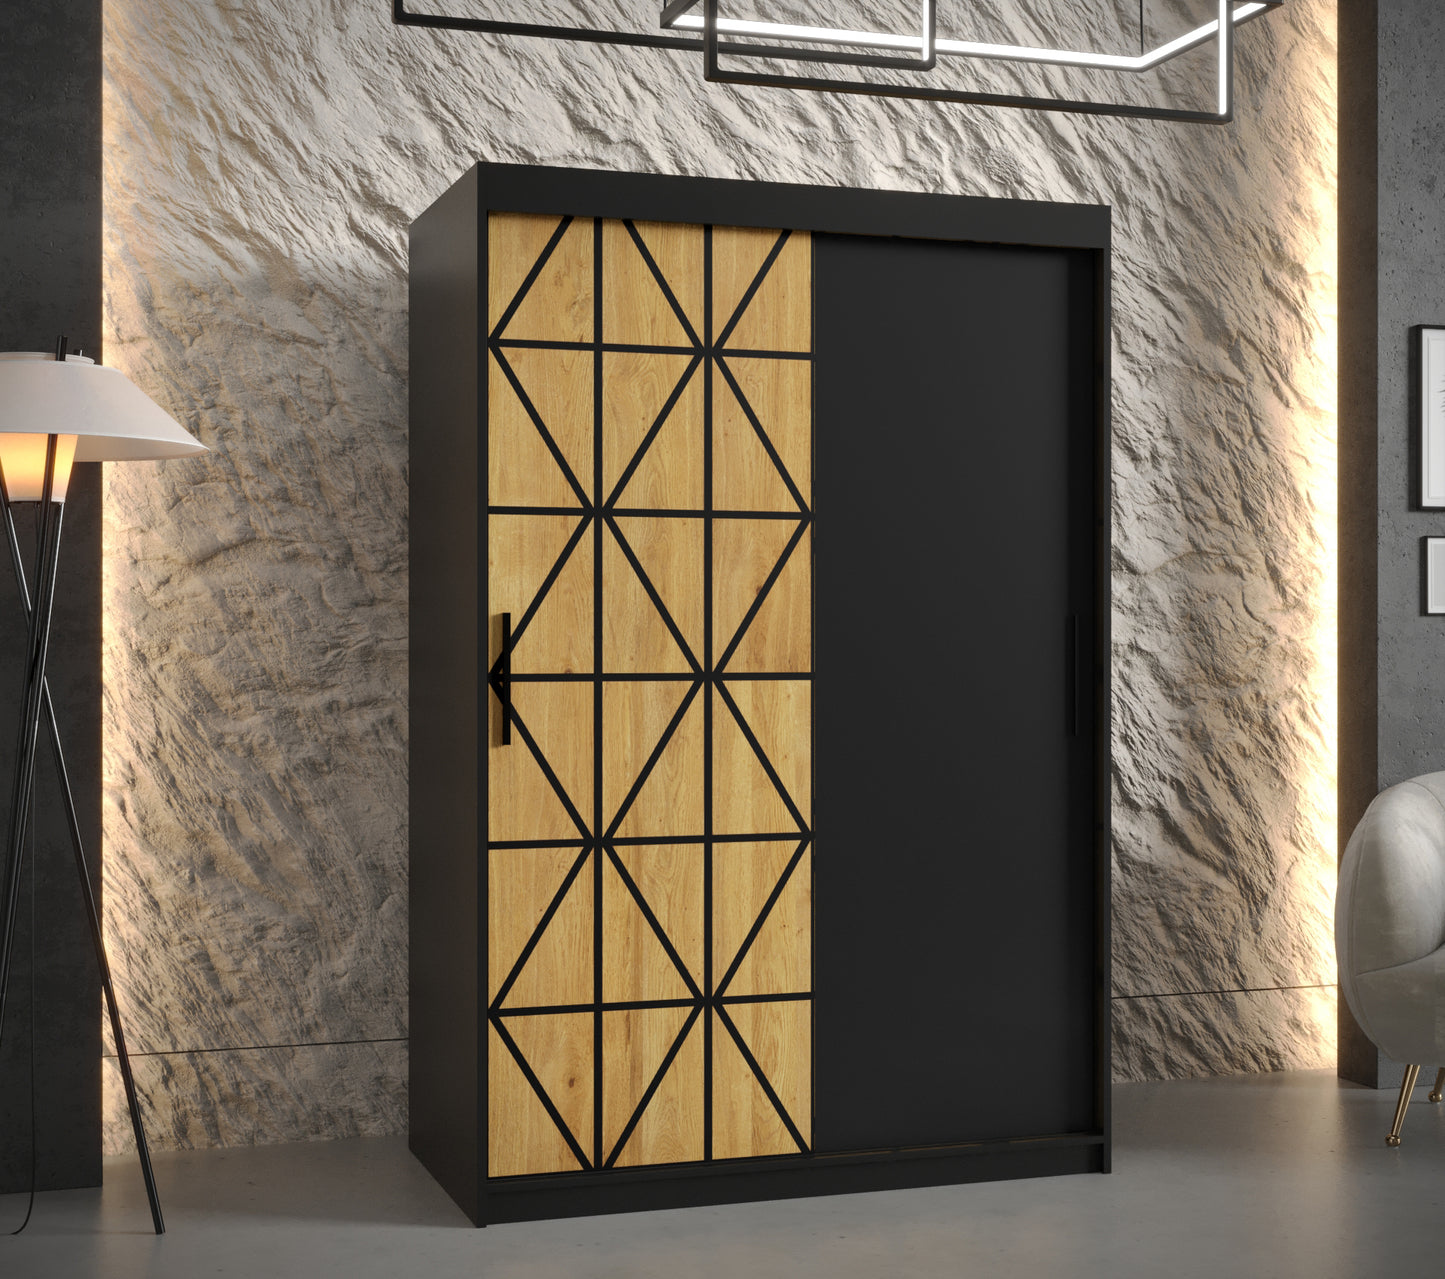 OSLO - Wardrobe Sliding Doors Black with Unique Pattern, Shelves, Rails, Drawers Optional >120cm<